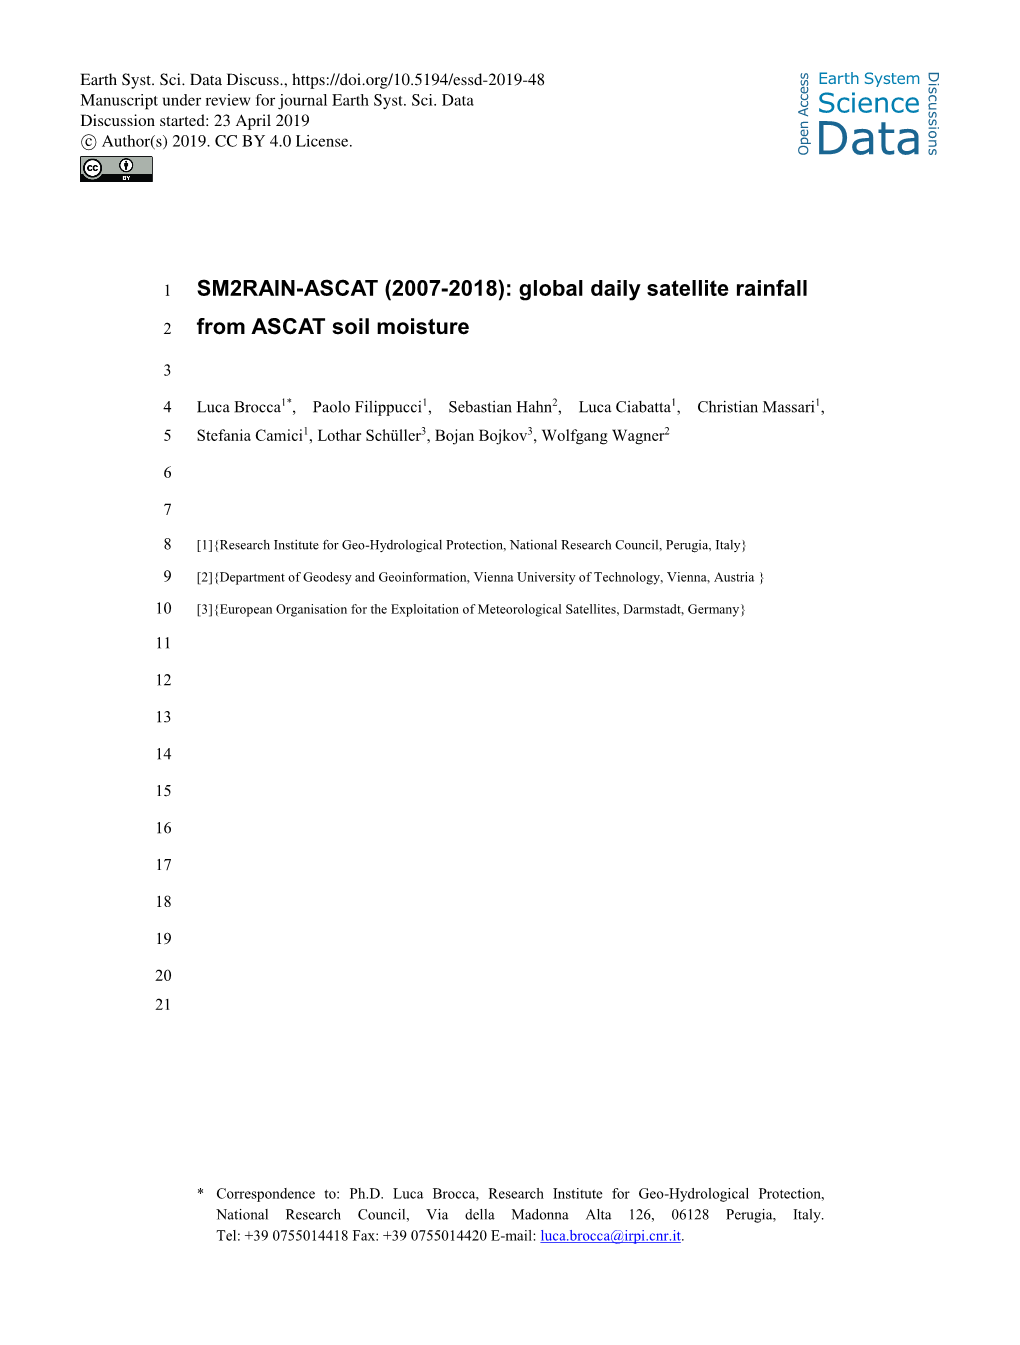 SM2RAIN–ASCAT (2007–2018): Global Daily Satellite Rainfall Data